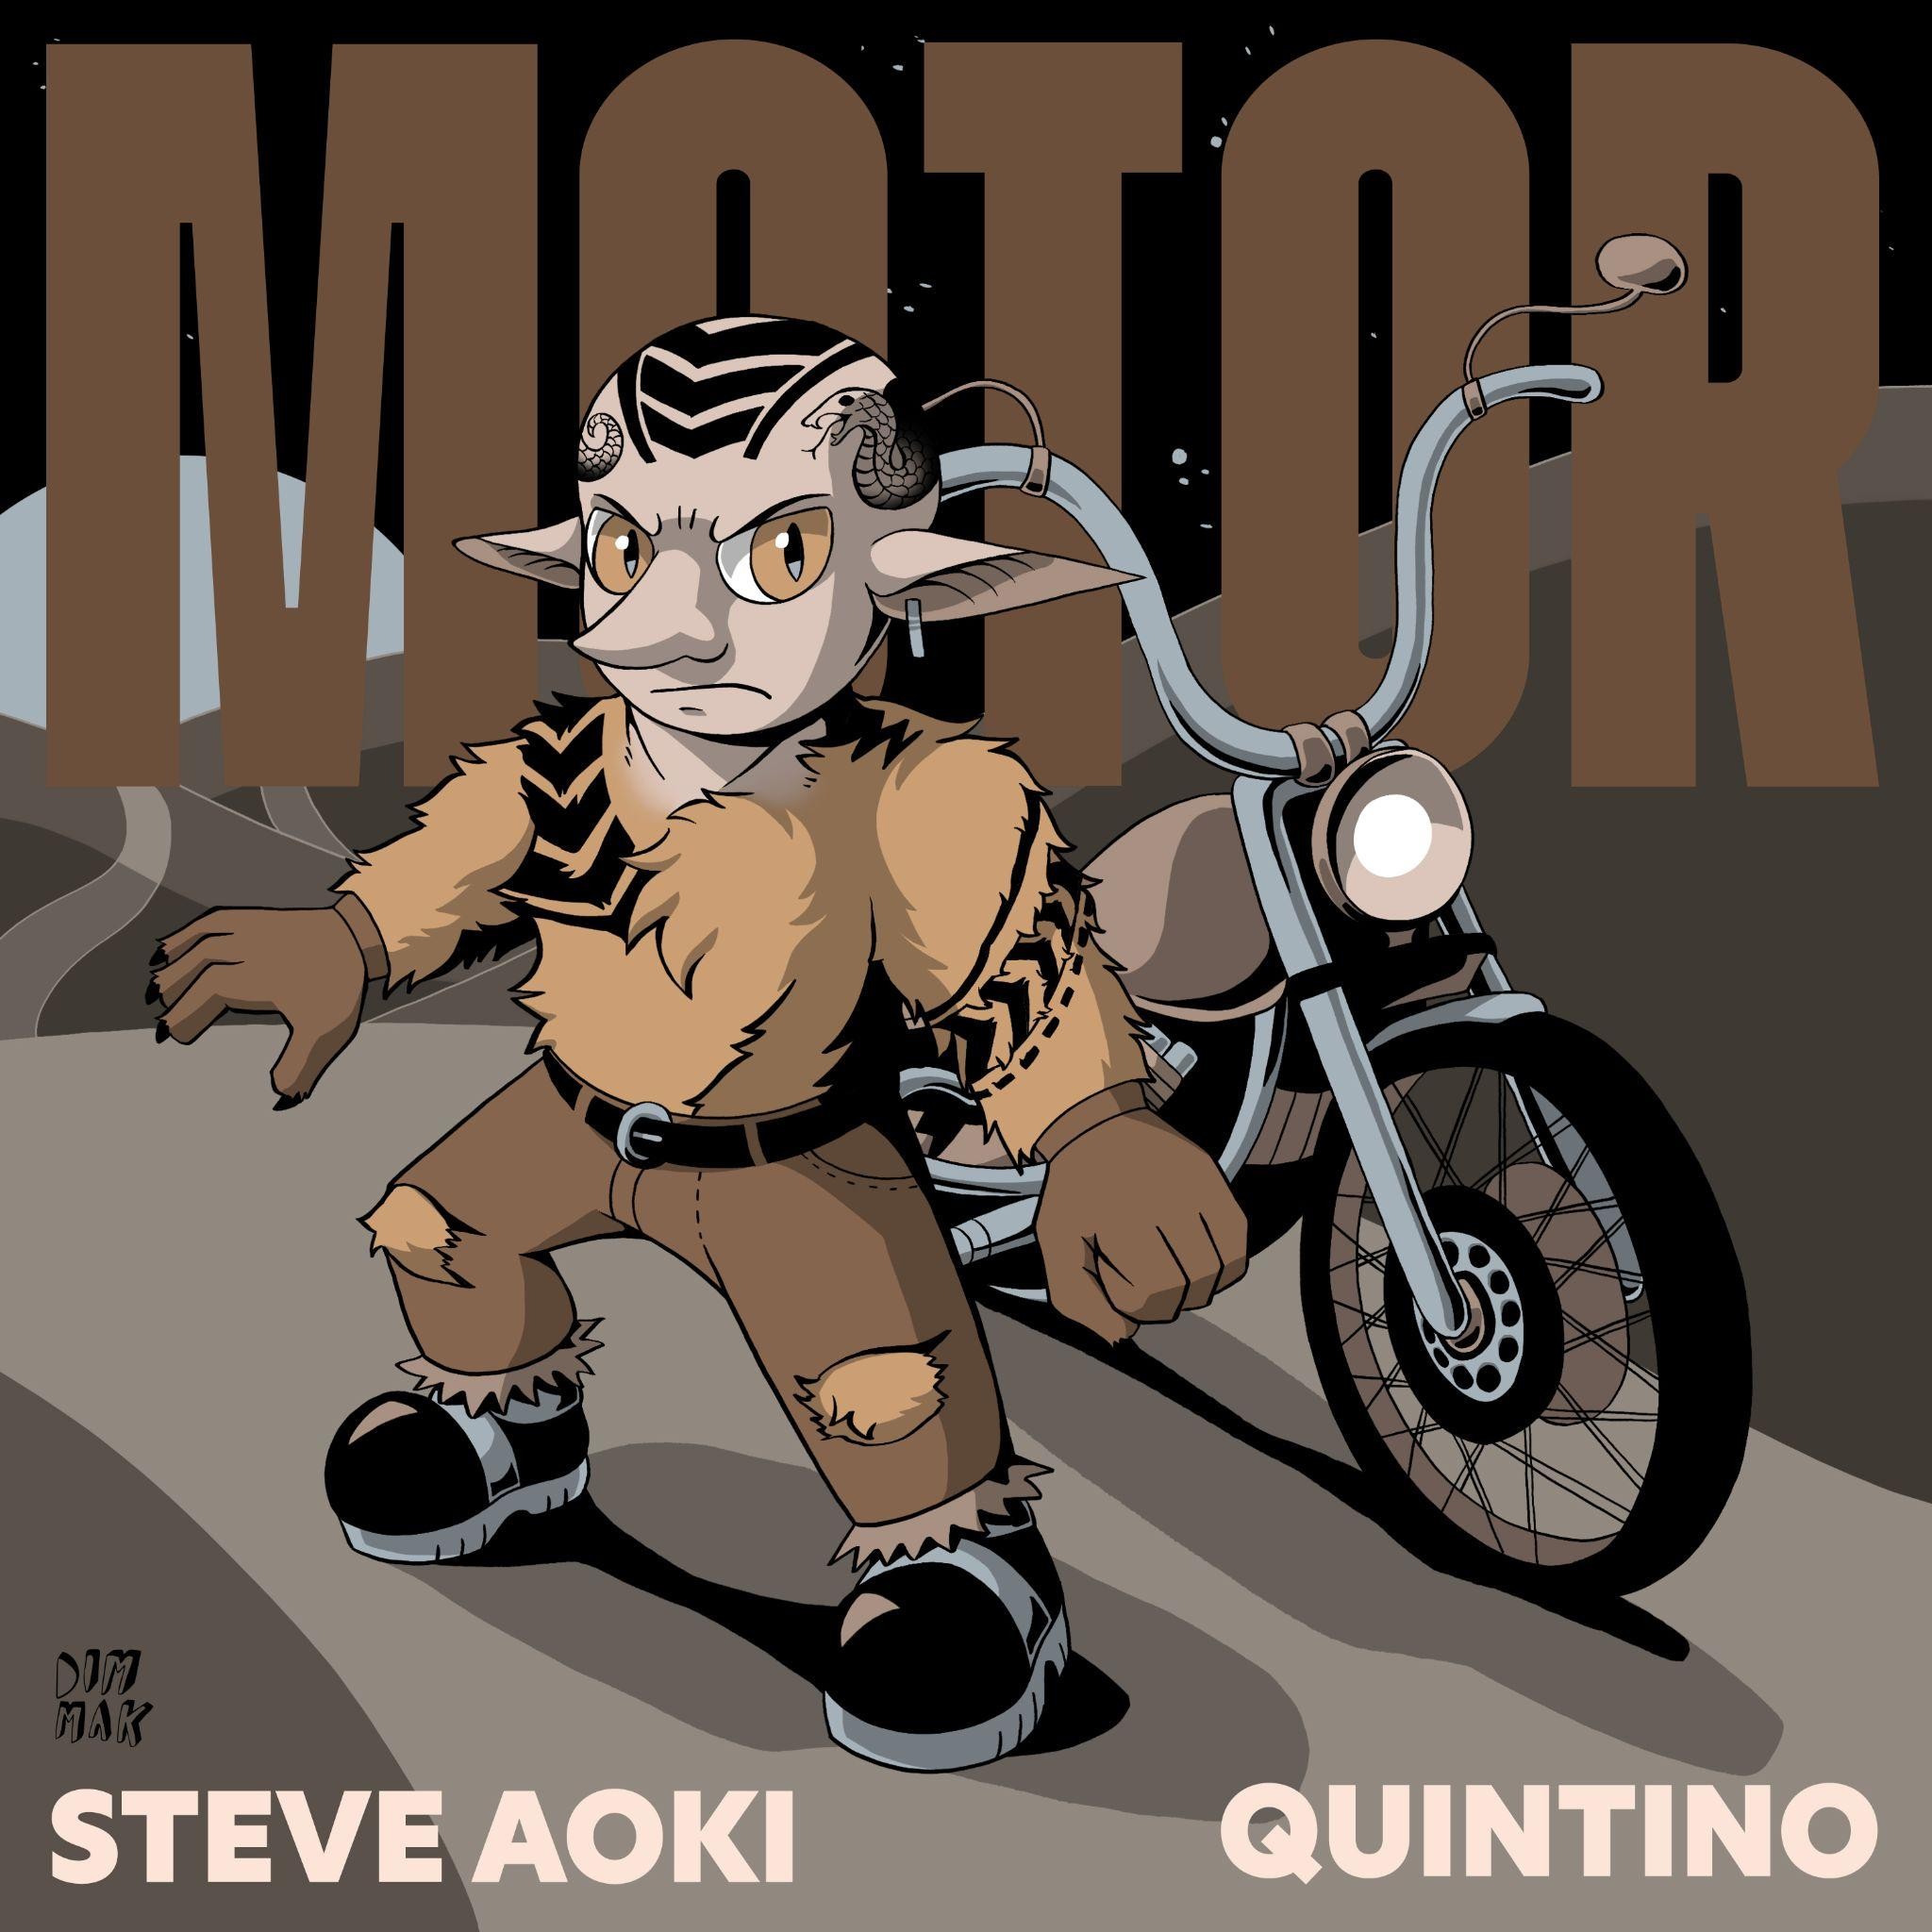  STEVE AOKI联手QUINTINO  带来全新合作单曲“MOTOR”